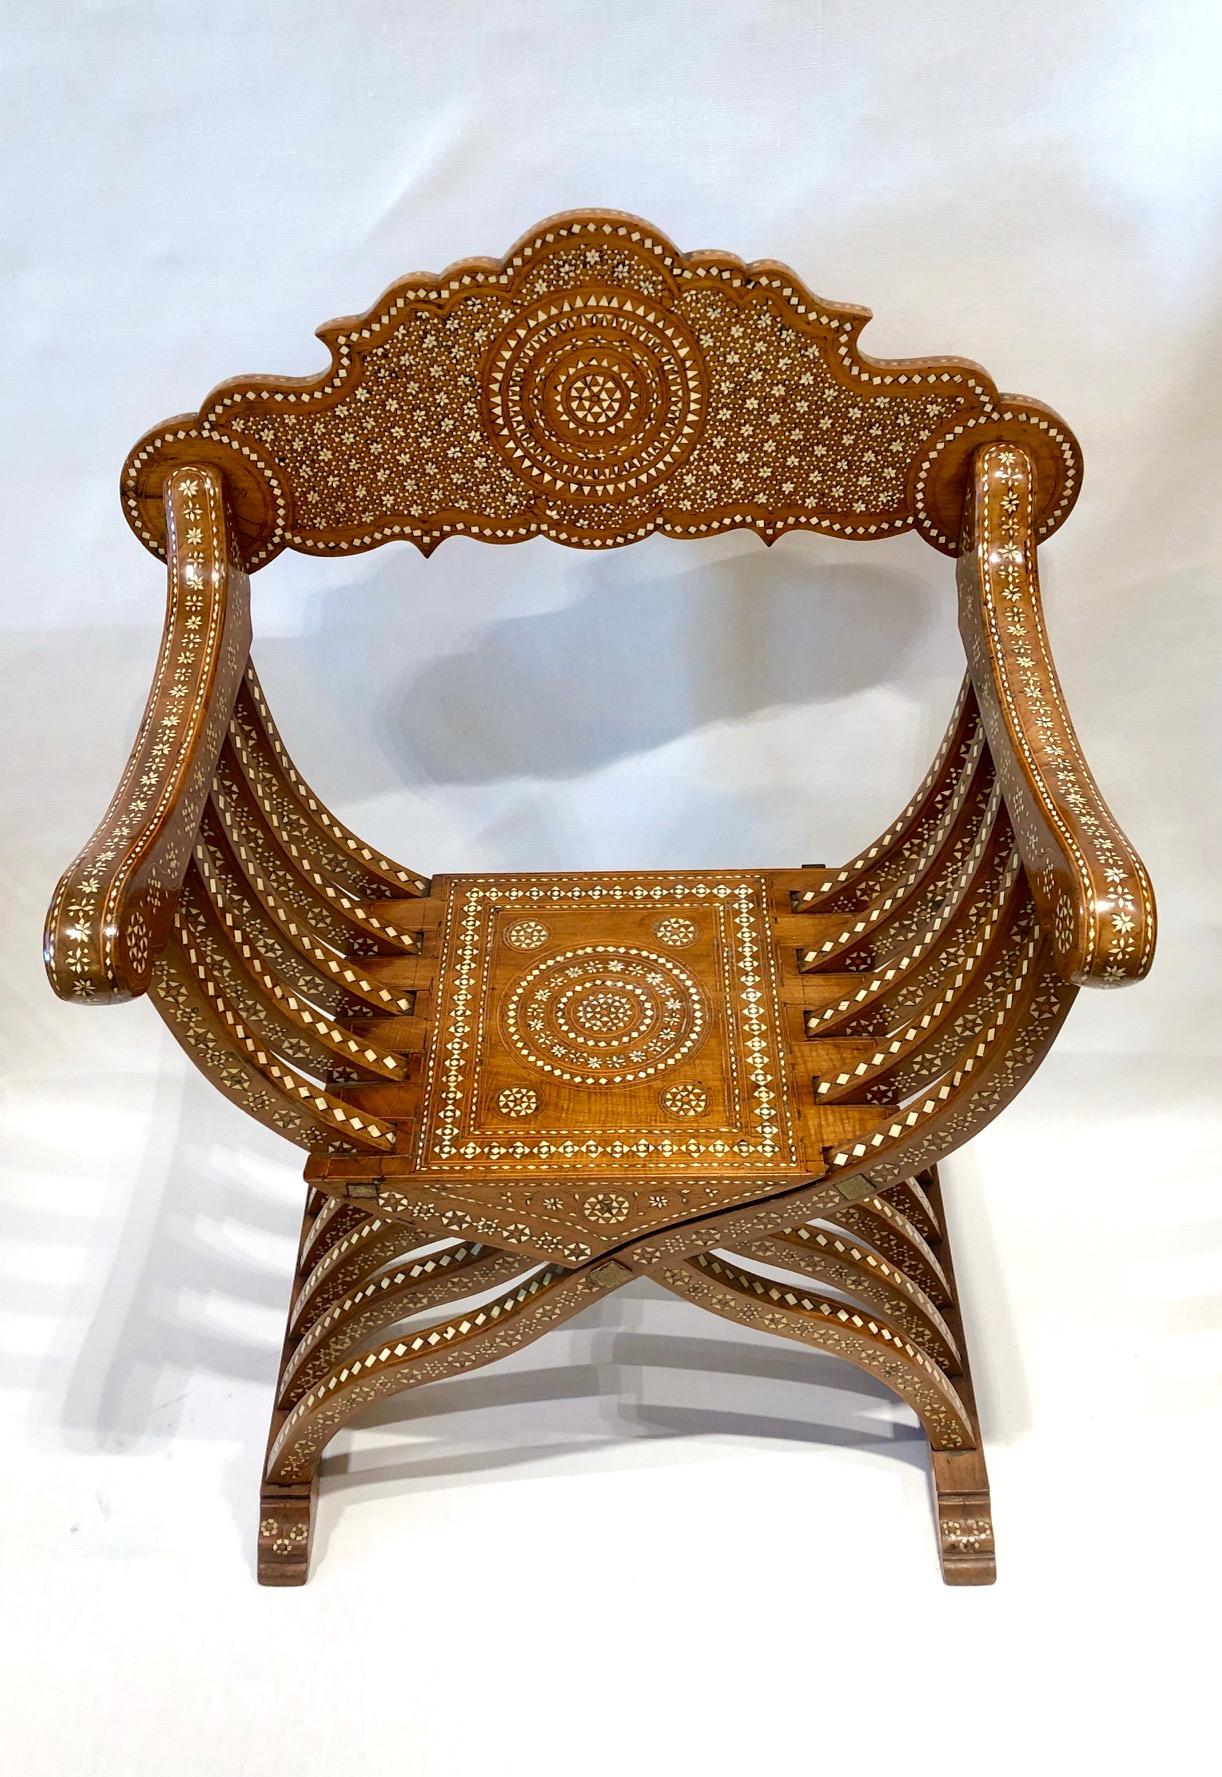 Walnut Savonarola folding chair, made in Italy, circa 1890.

